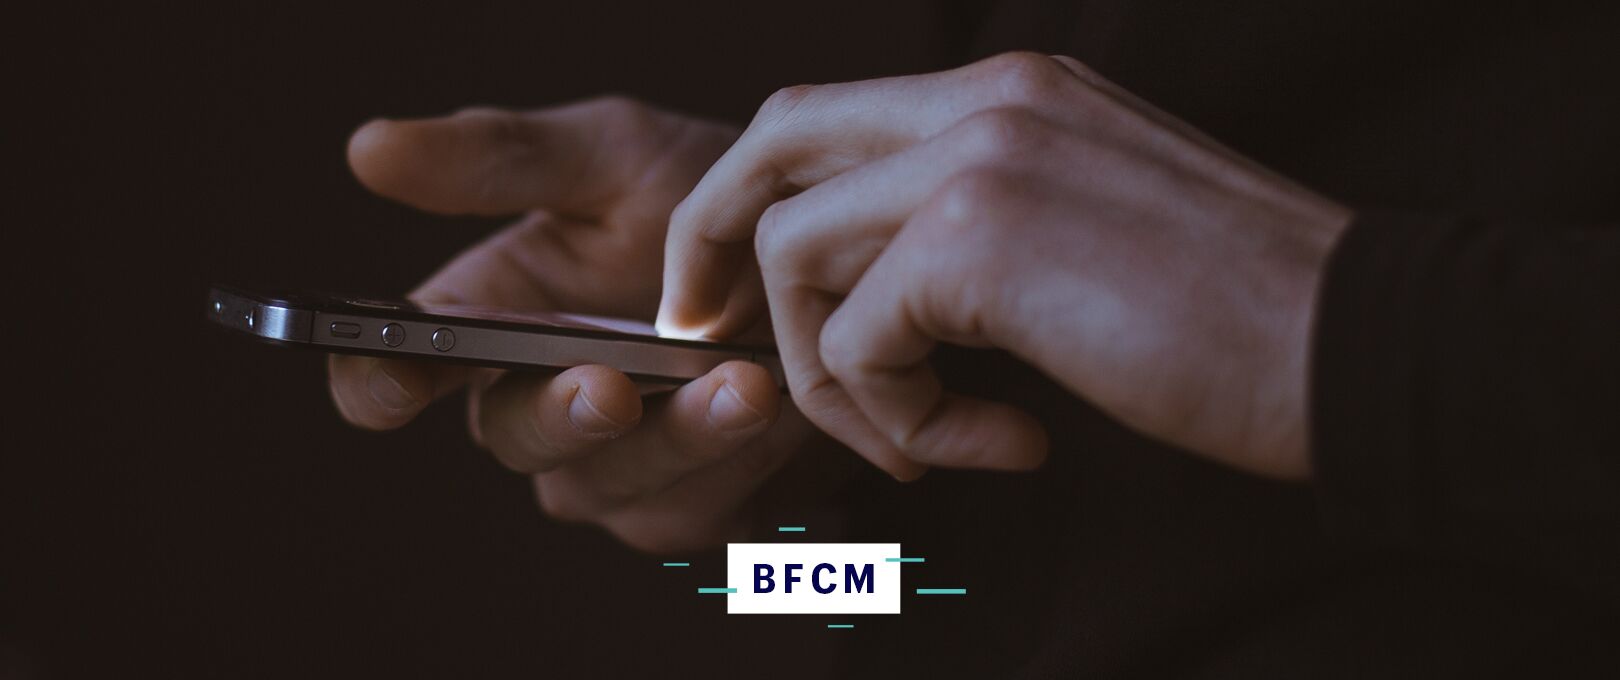 BFCM social media campaigns